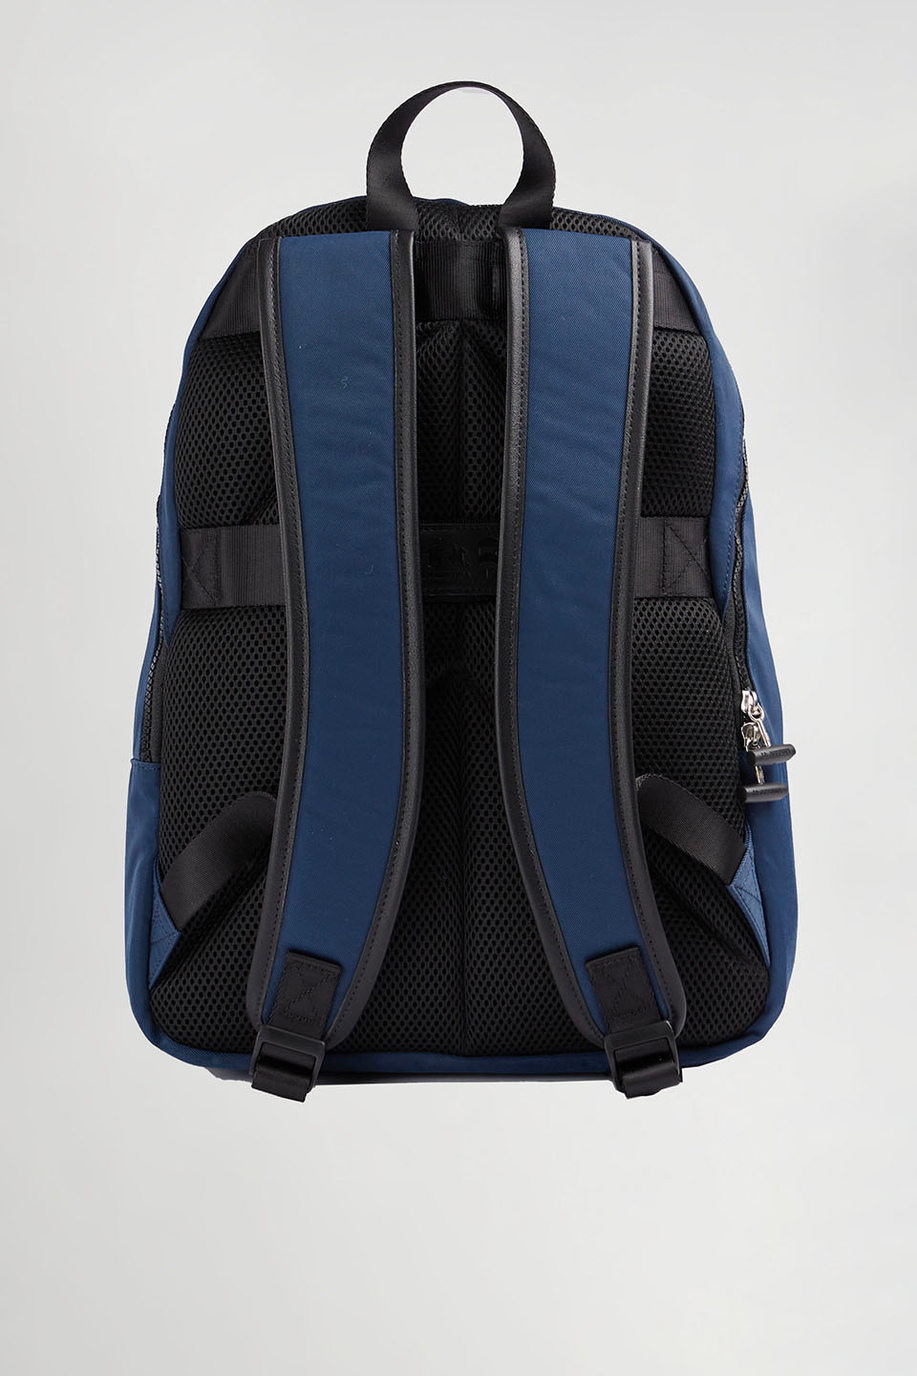 Nylon backpack - Accessories Man | La Martina - Official Online Shop